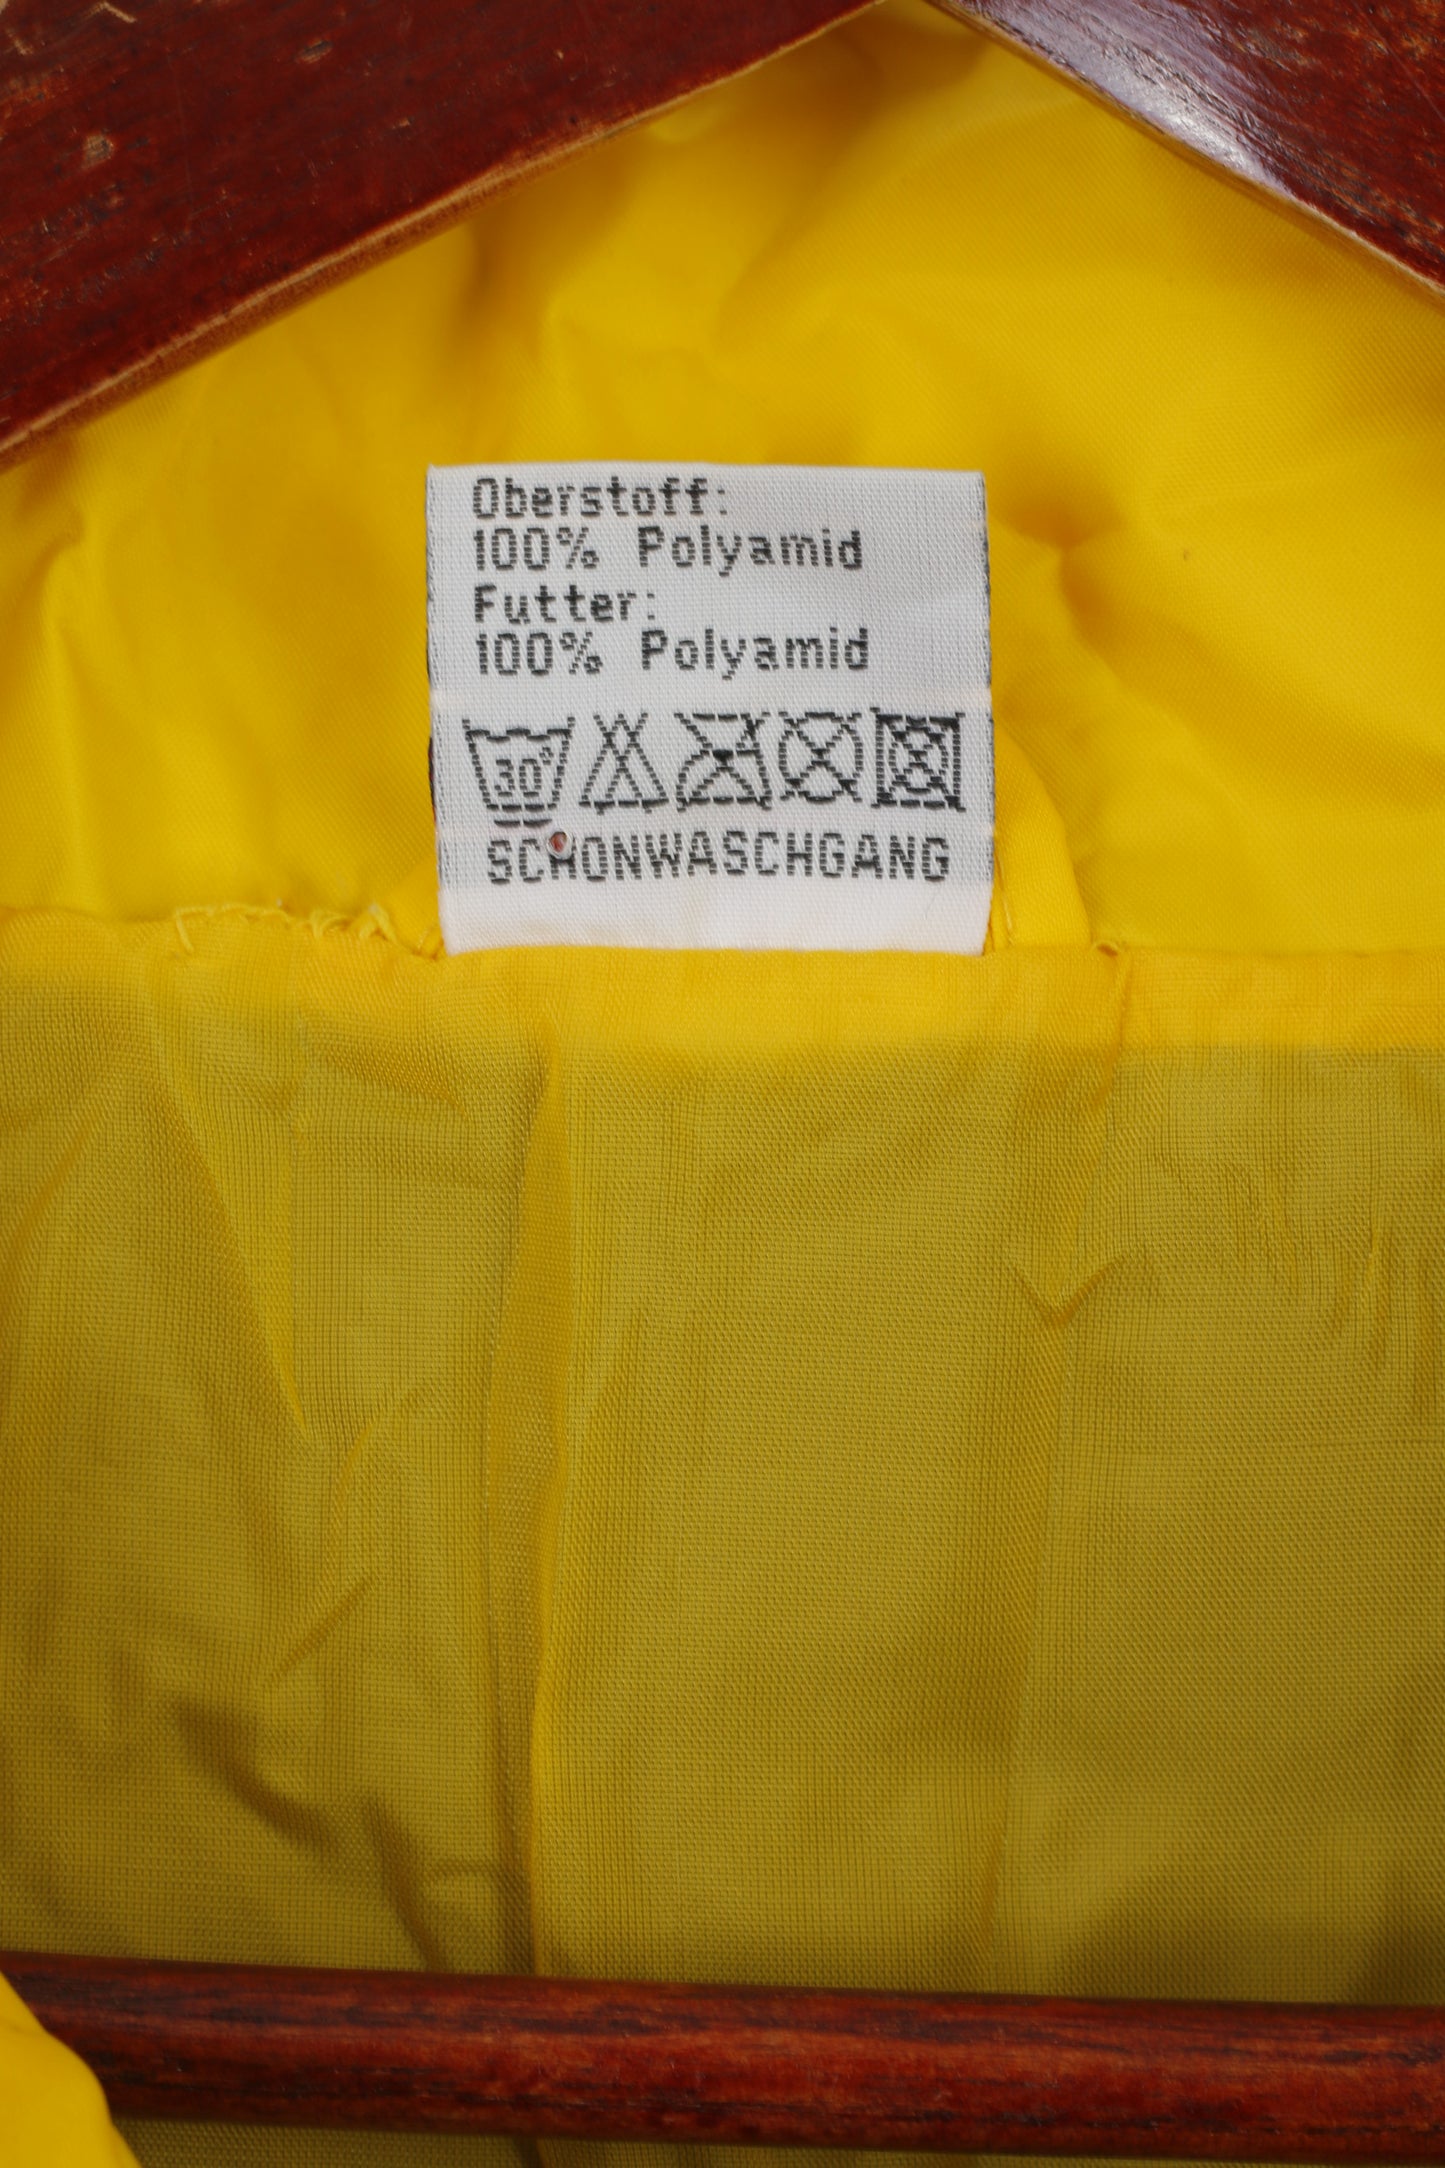 Formicula Boys 164 Jacket Blue Yellow Nylon Waterproof Hooded Reflective Top